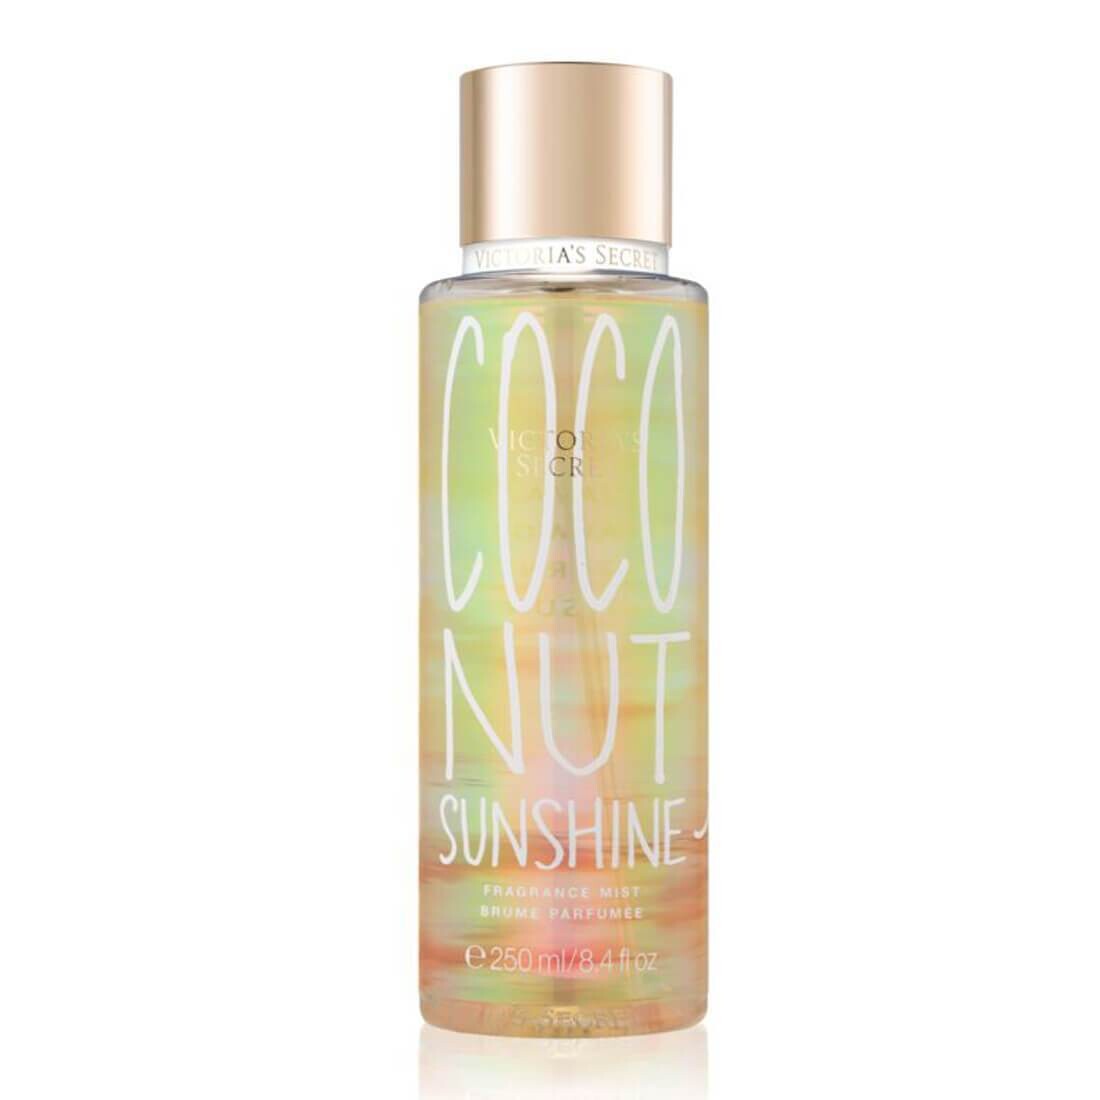 Victoria’s Secret Coconut Sunshine Fragrance Mist 250ml